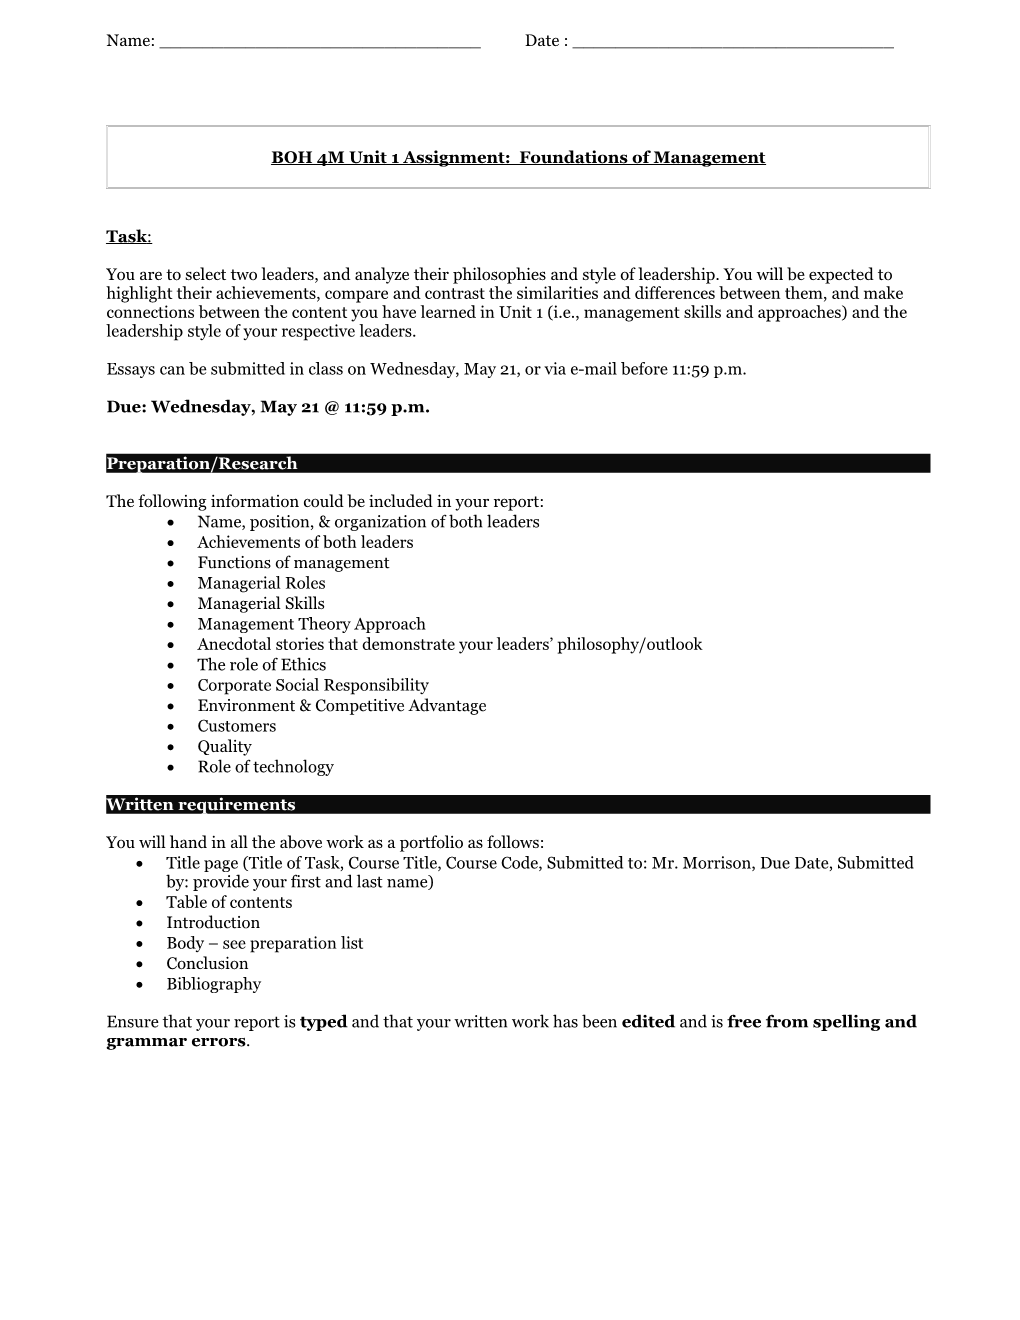 BOH 4M Unit 1 Assignment: Foundations of Management